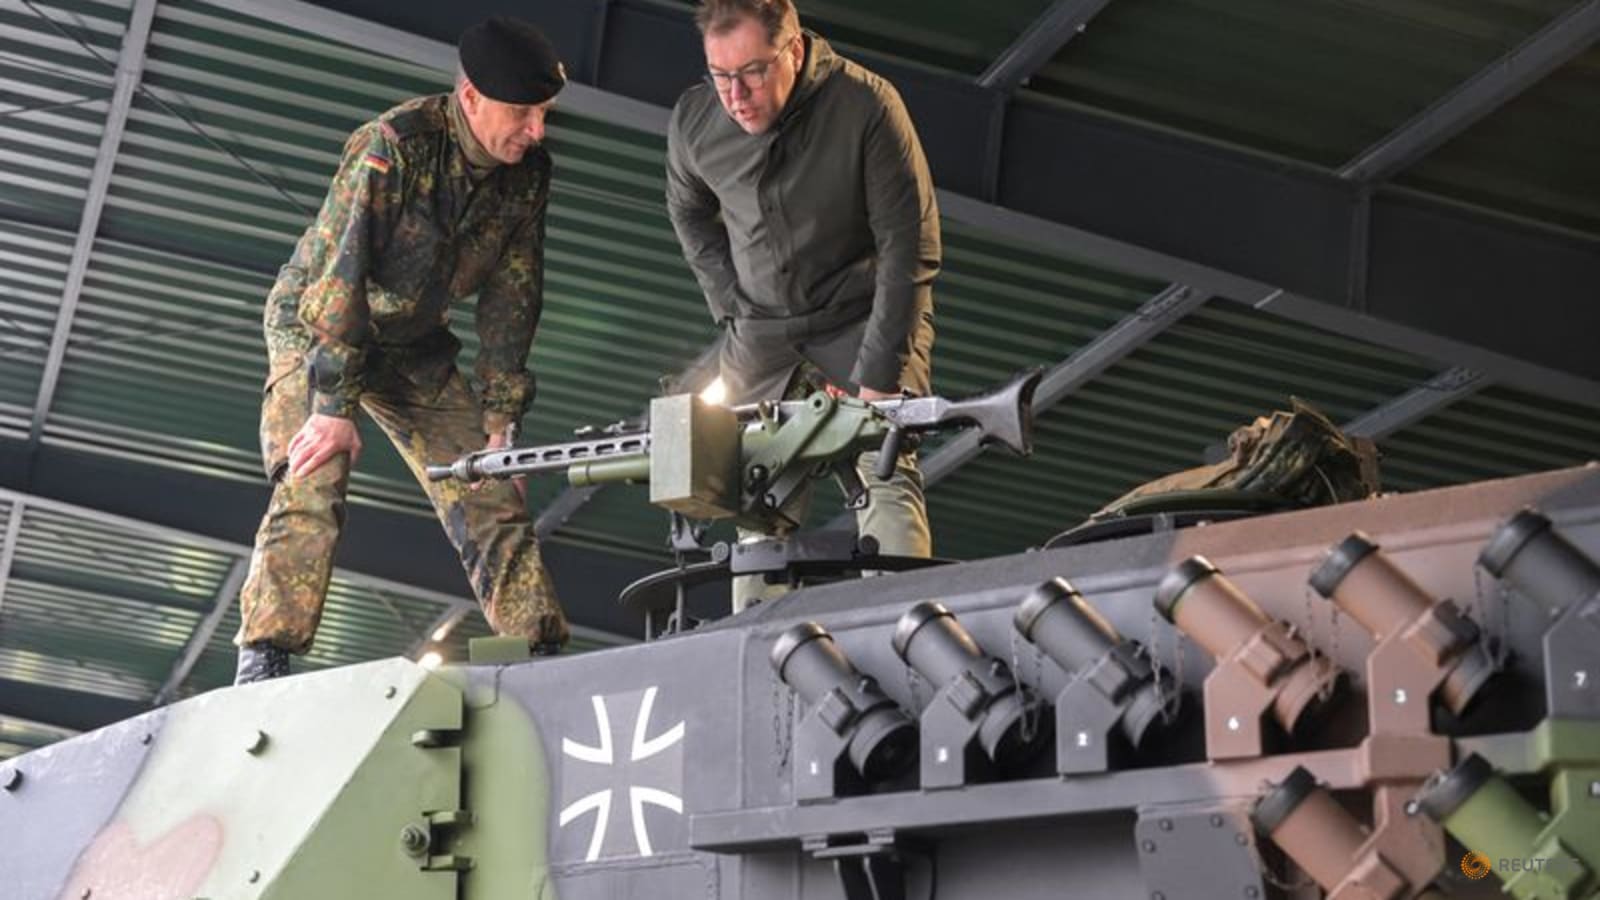 leopard-tanks-like-a-mercedes,-says-ukrainian-soldier-training-in-germany